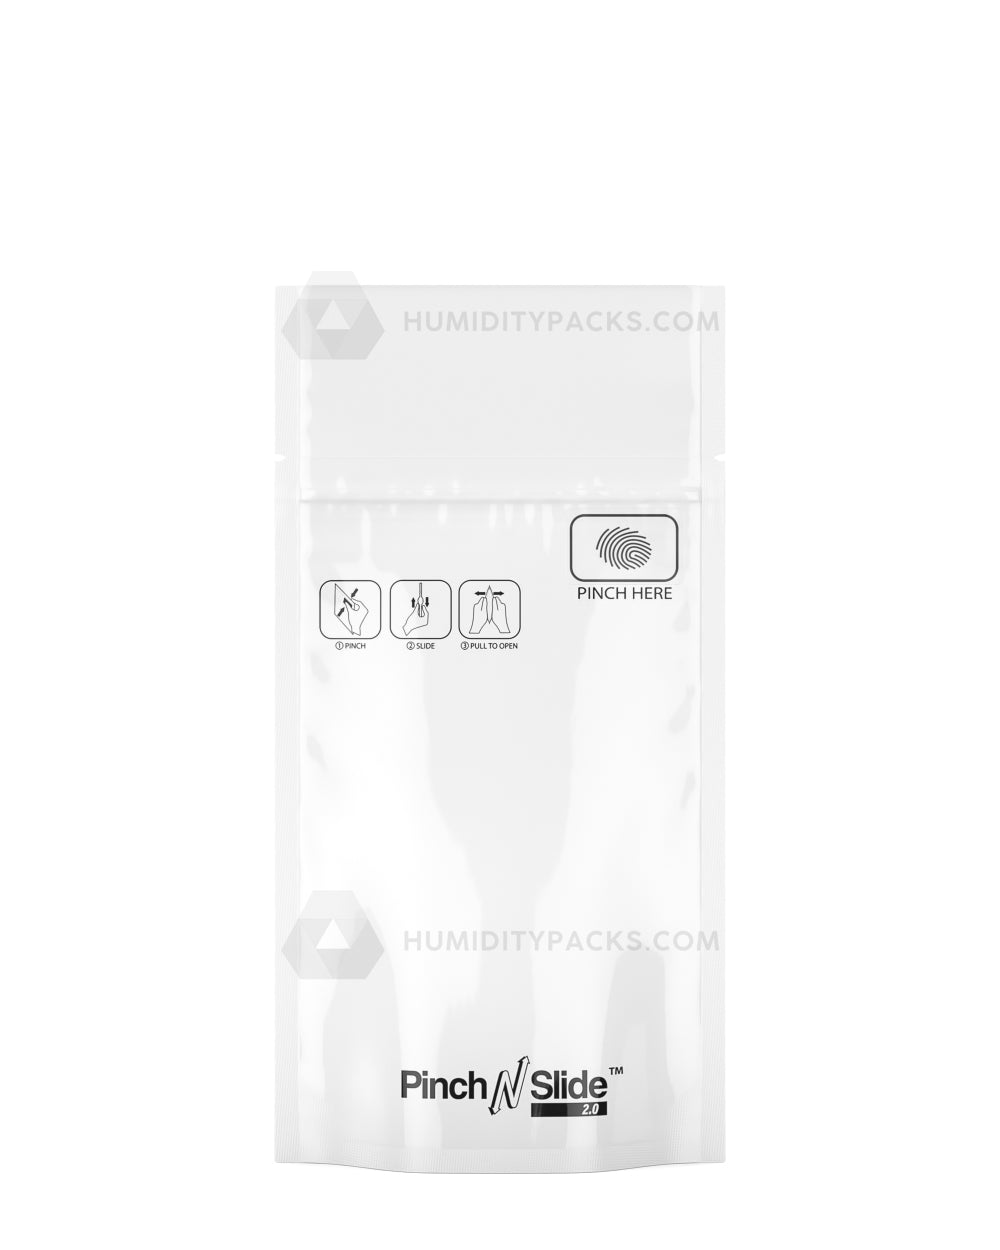 Matte-White 3.5" x 5" Pinch N Slide 2.0 Mylar Child Resistant & Tamper Evident Bags (3.5 grams) 250/Box